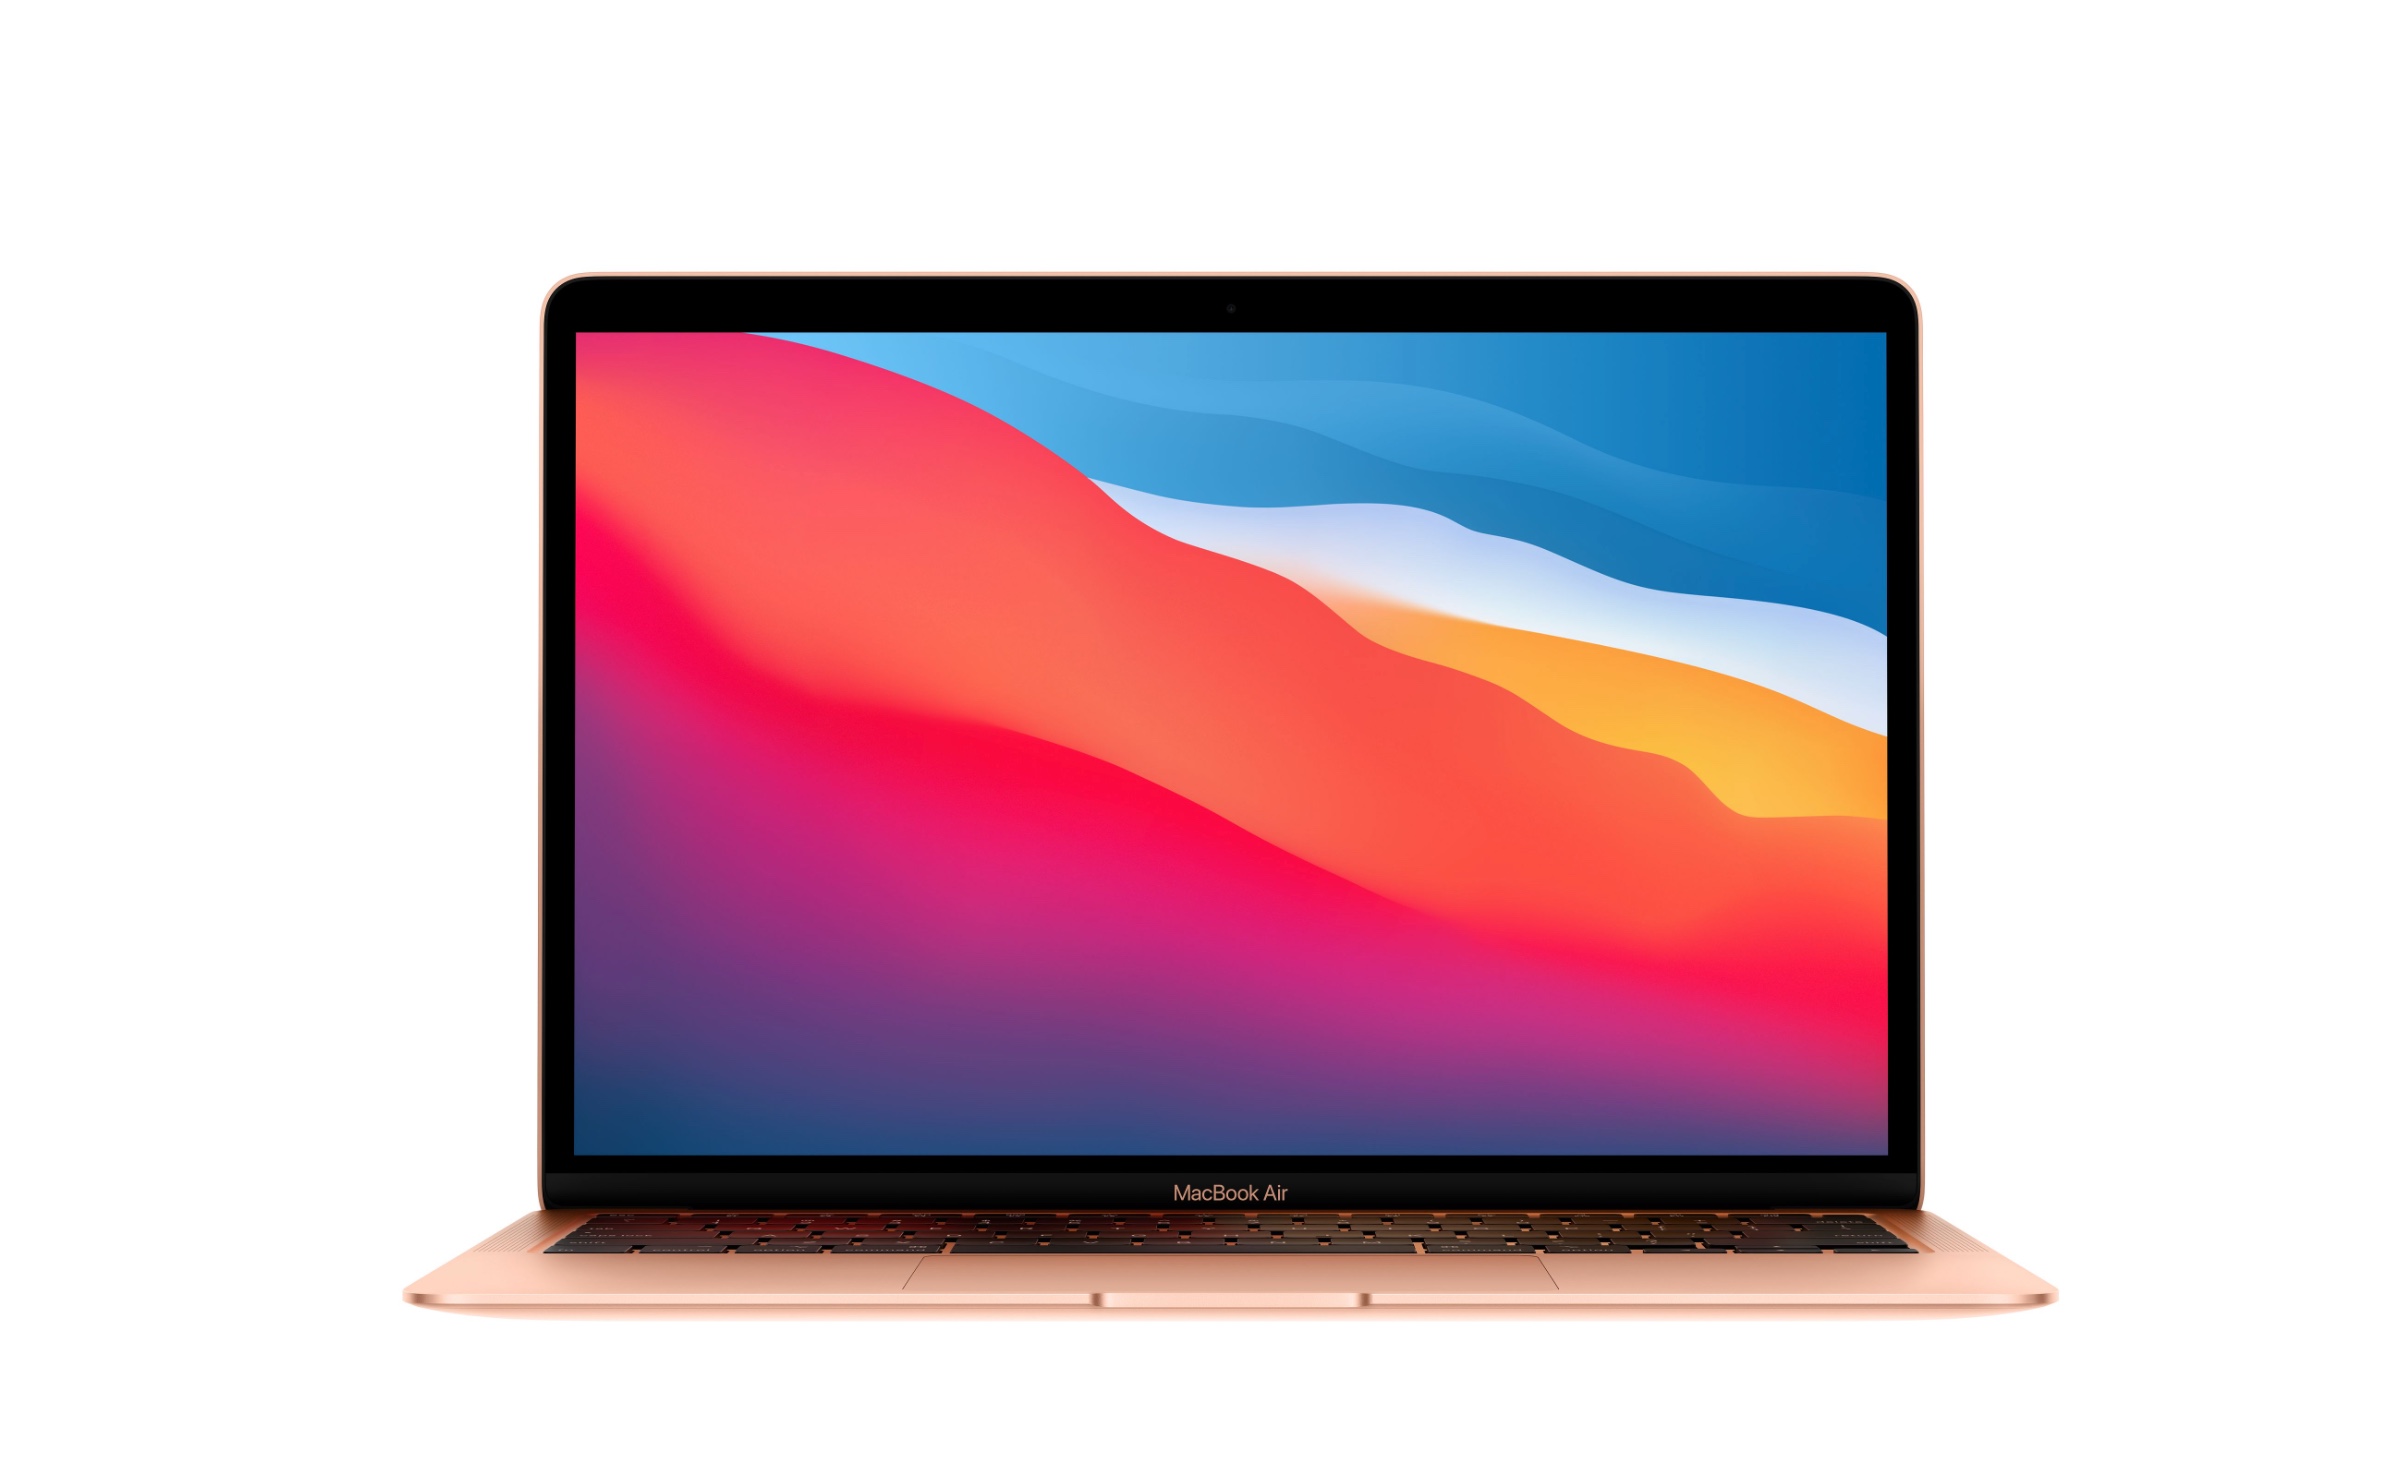 Apple MacBook Air M1 (2020)